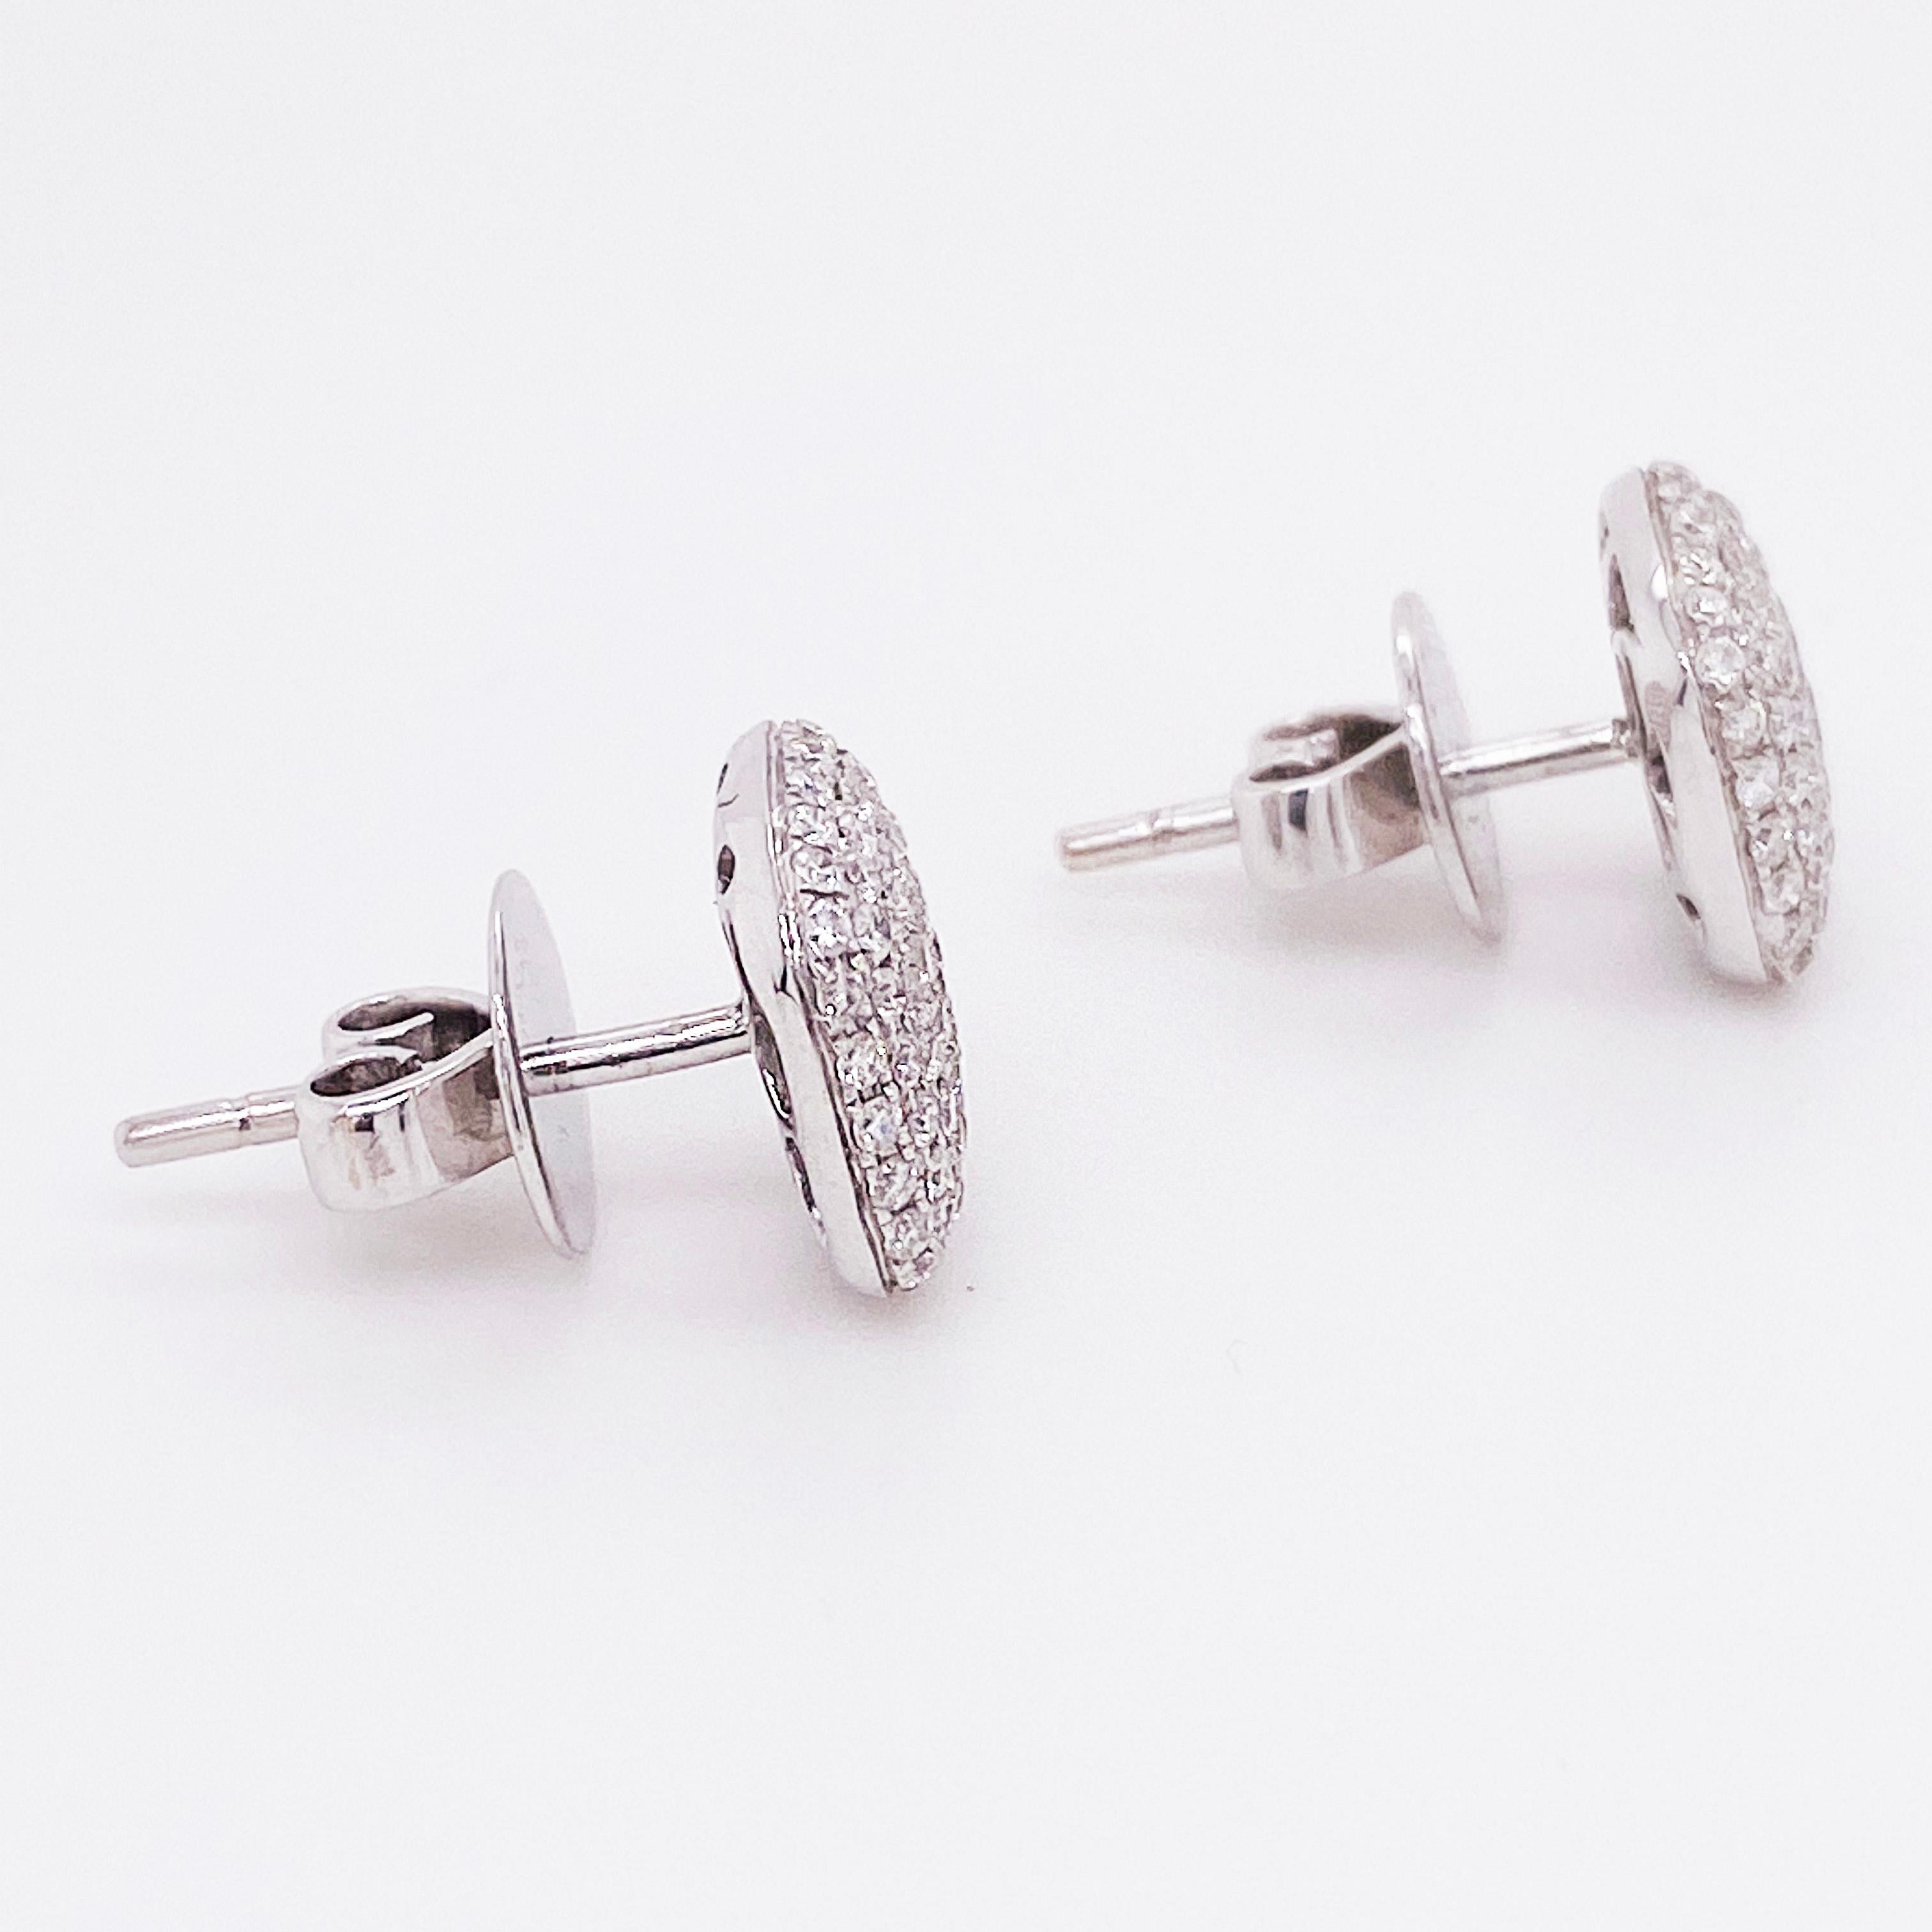 .75 carat diamond earrings